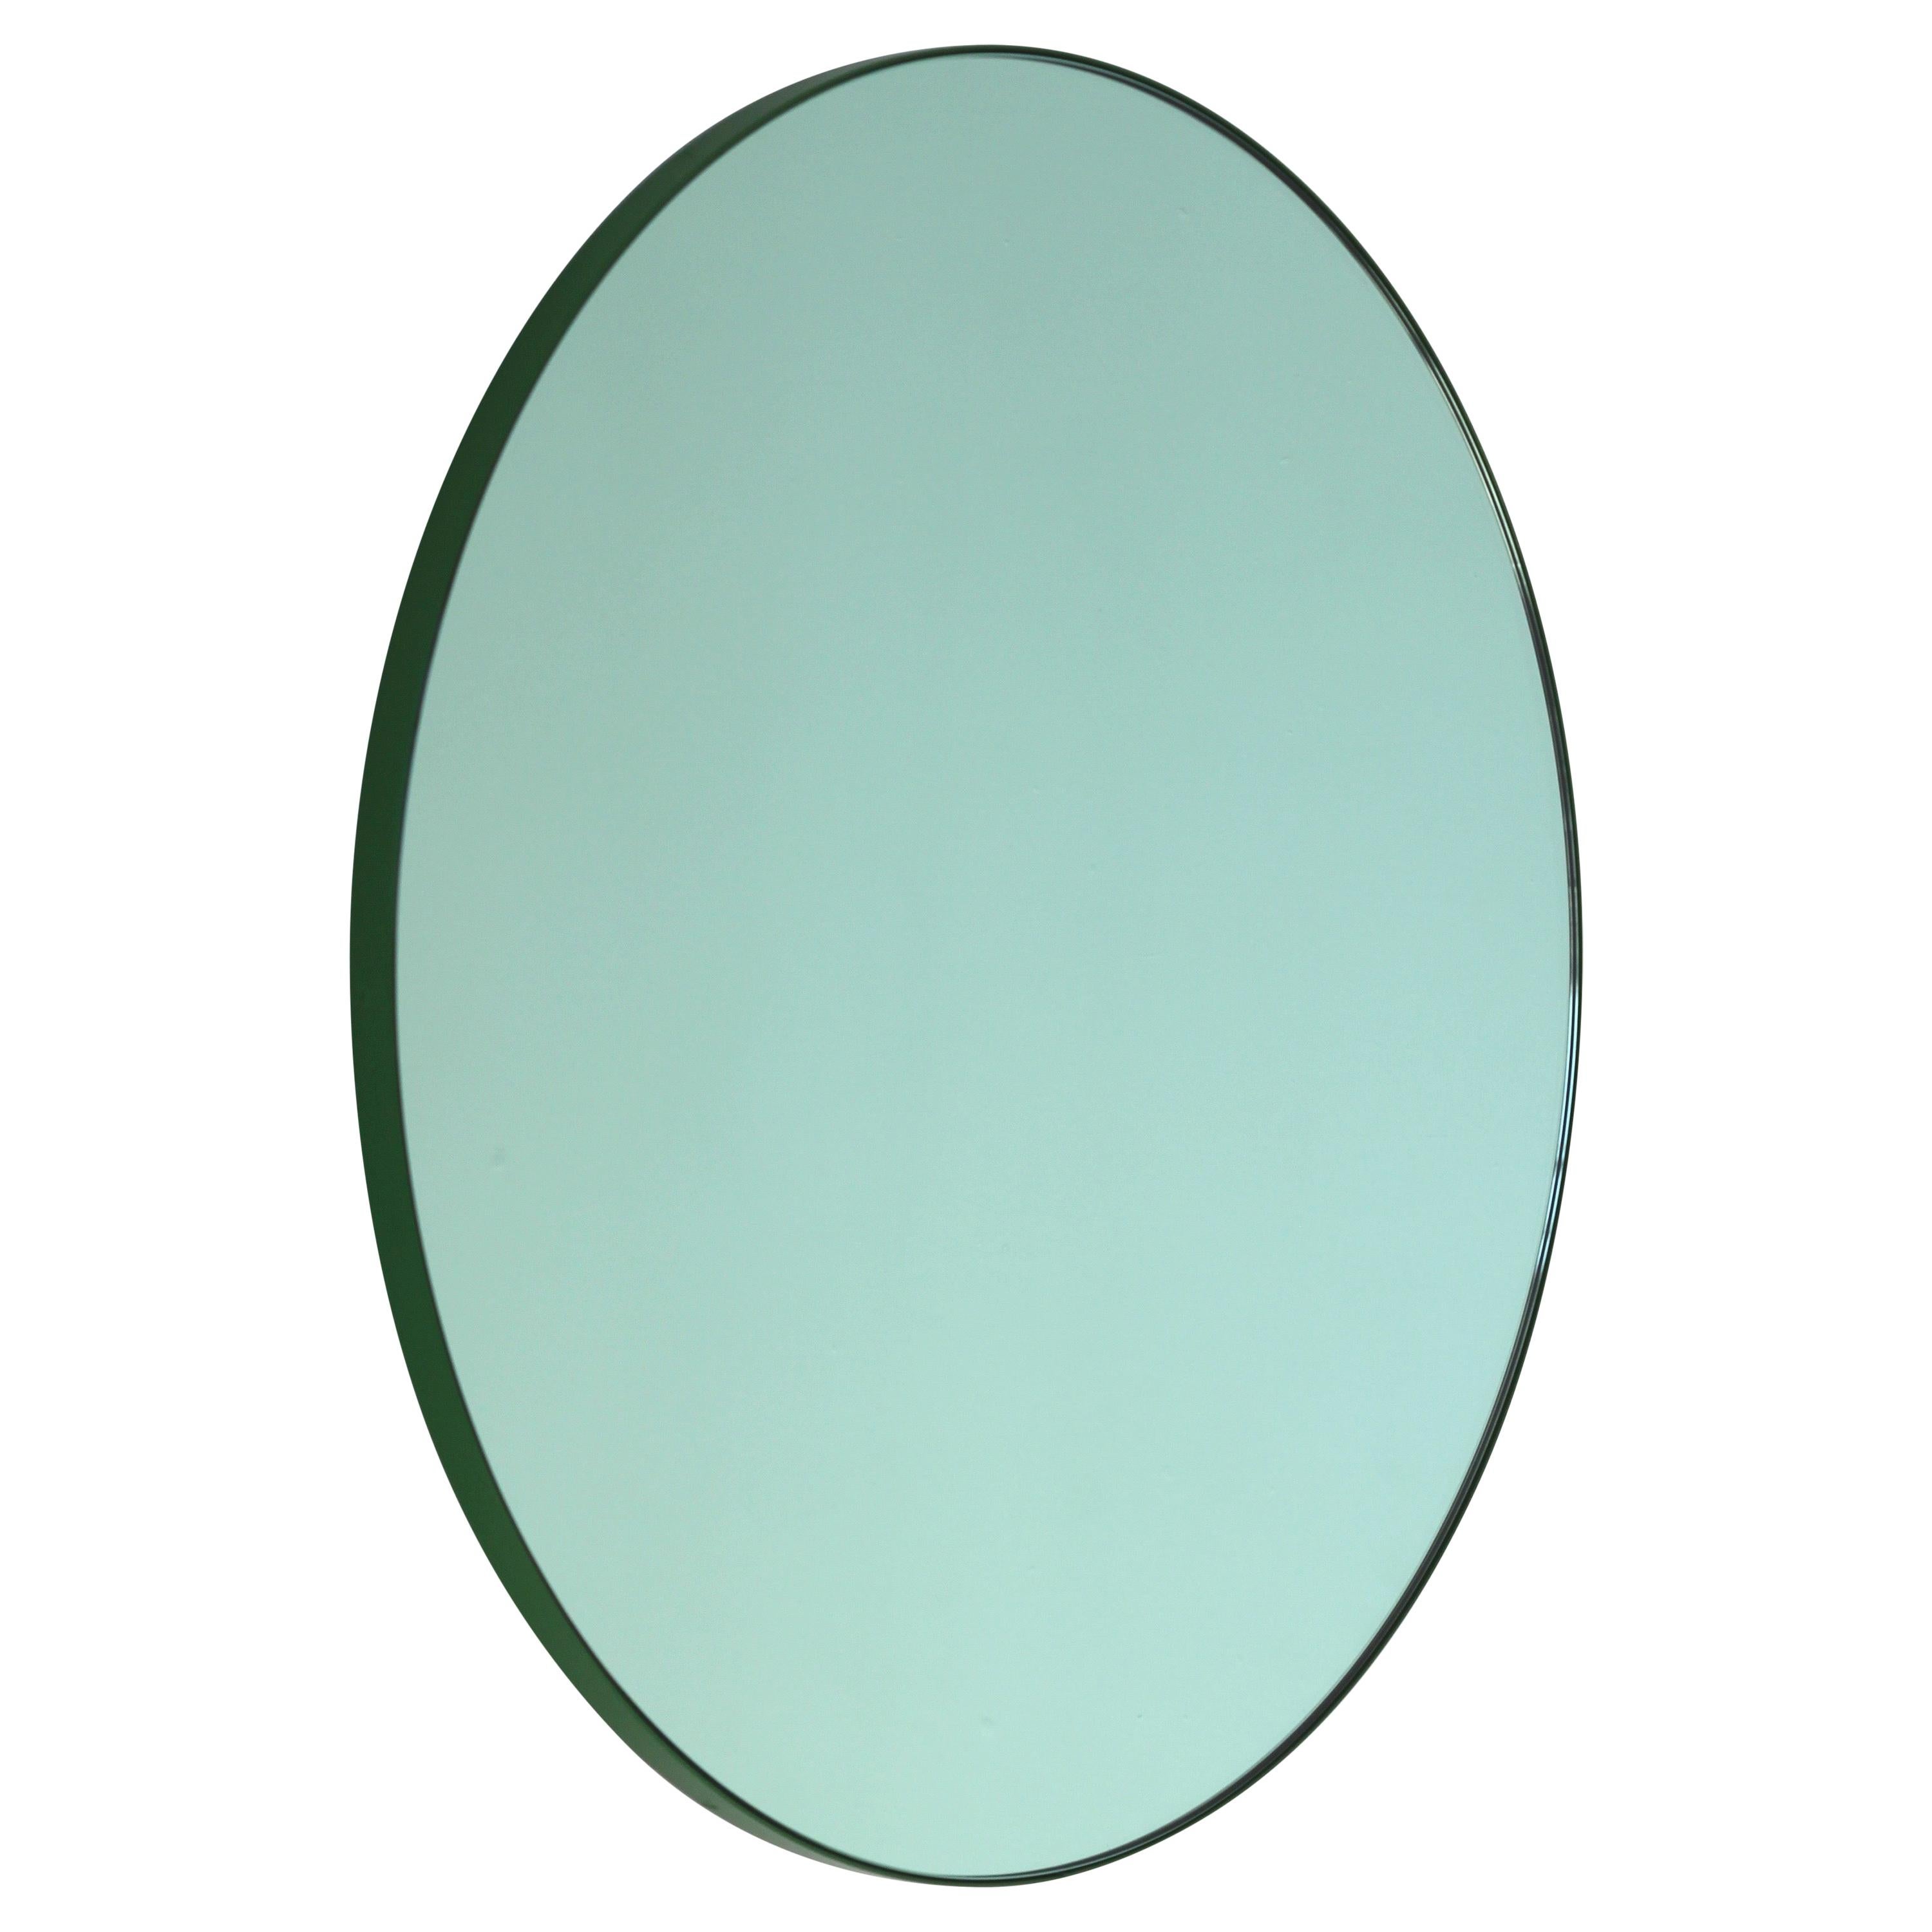 Orbis Green Tinted Modern Round Mirror with Green Frame - Medium